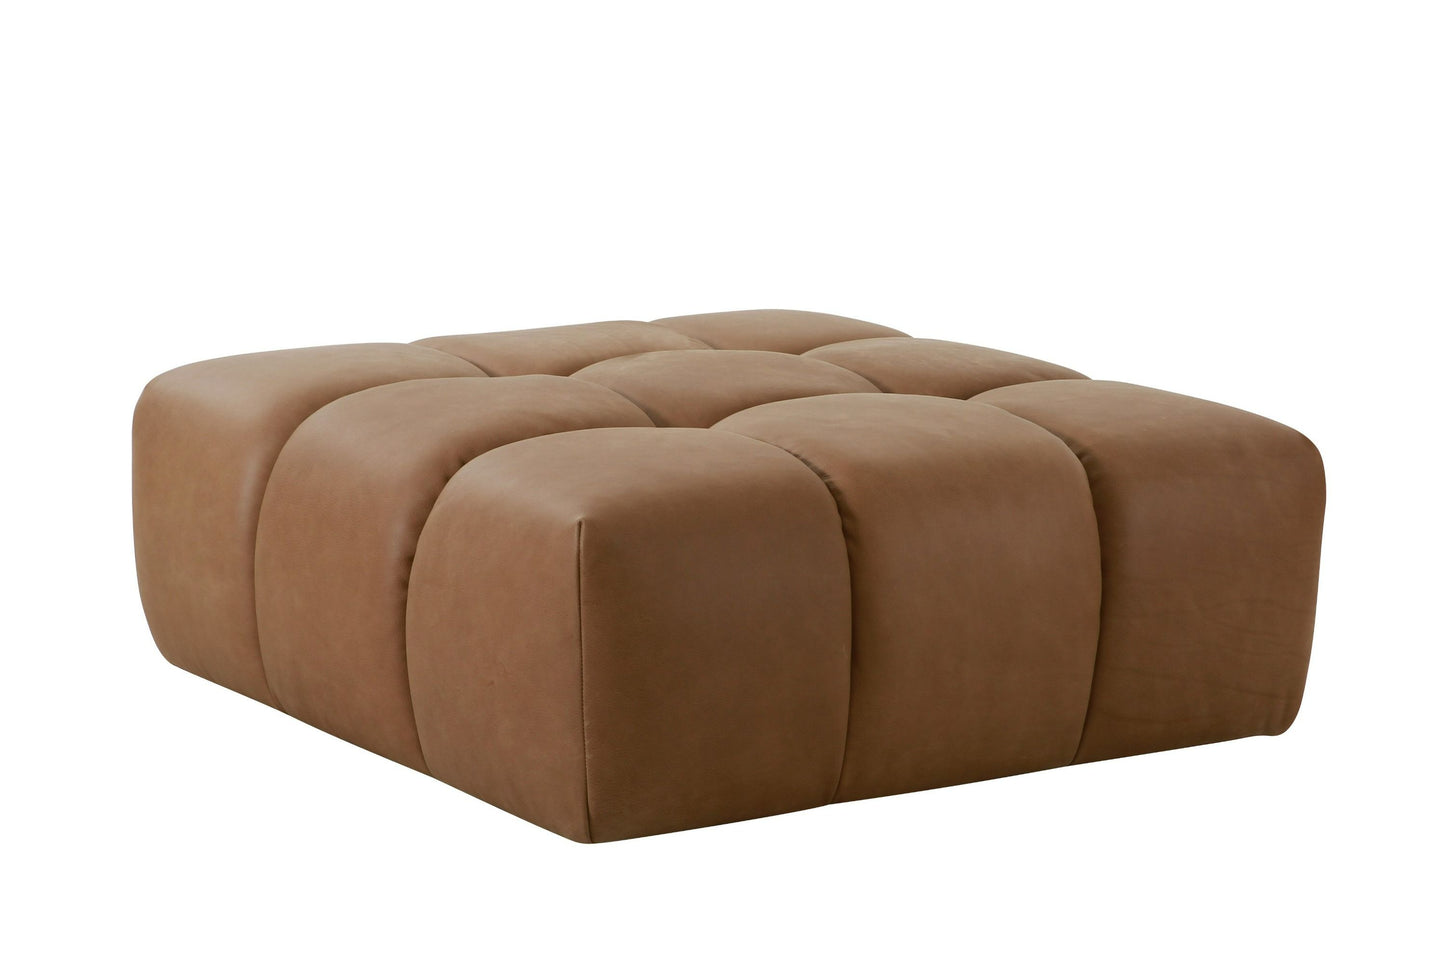 Divani Casa Everest - Modern Brown Leather Modular Sectional Sofa